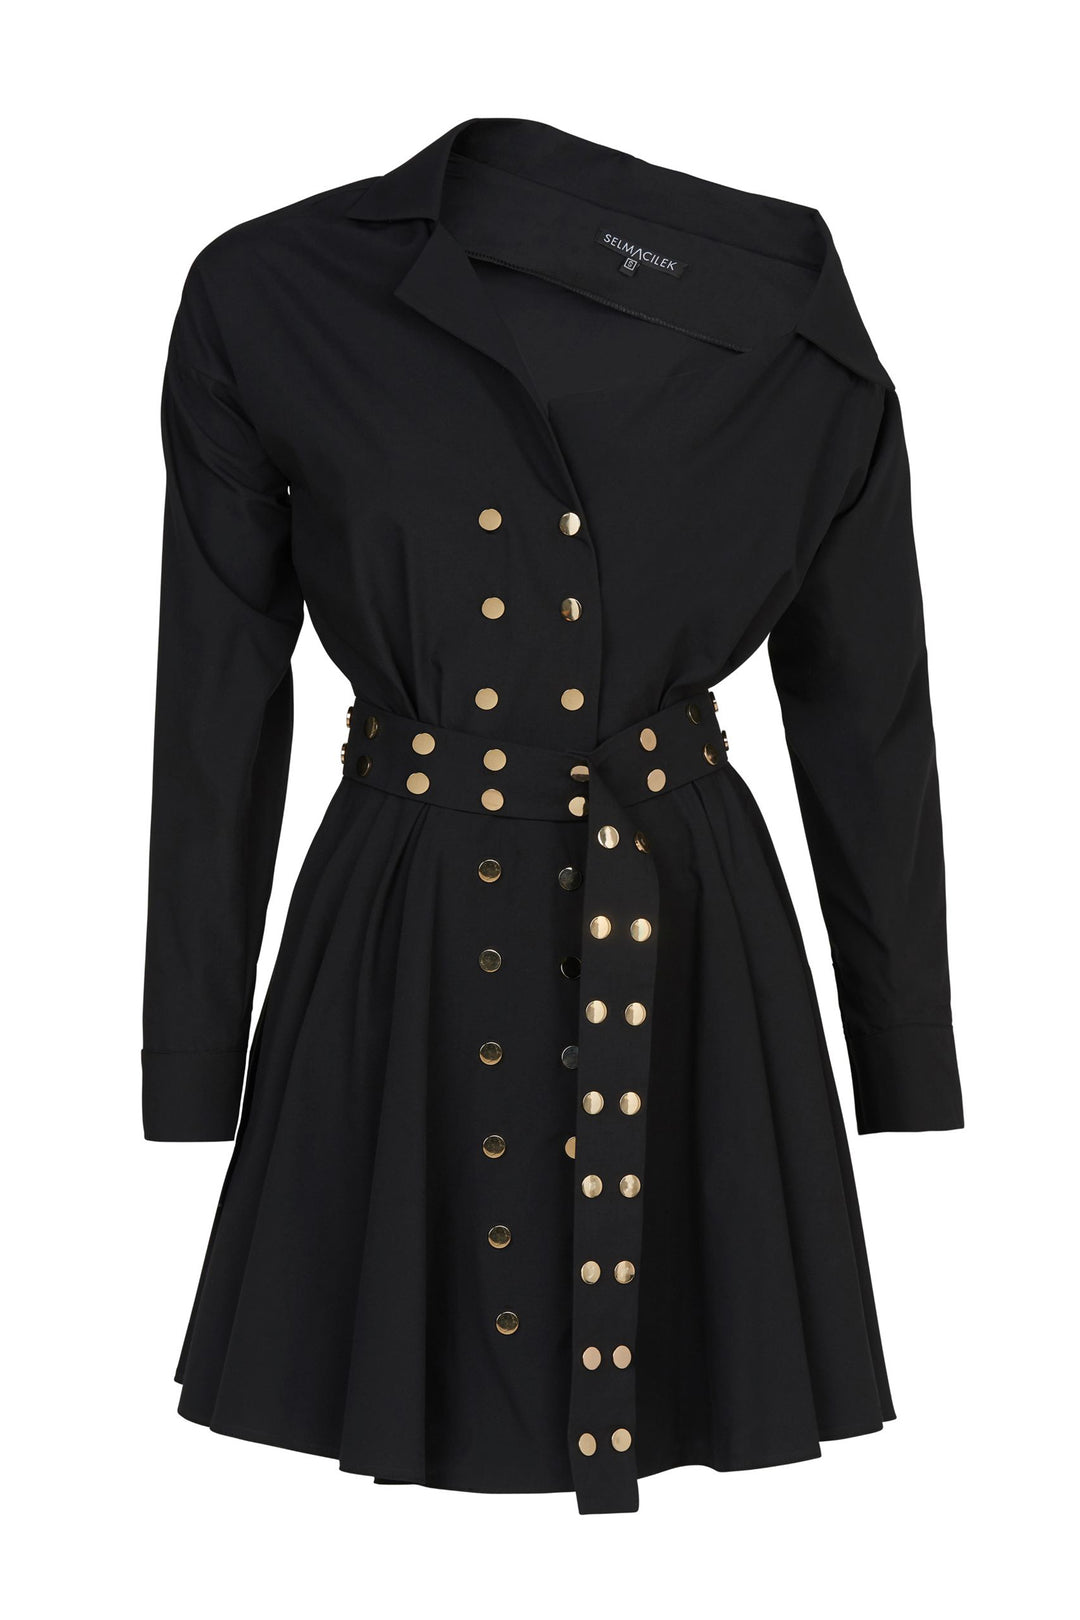 Siyah Asimetrik-Yaka, Uzun-Kol, Mini Elbise